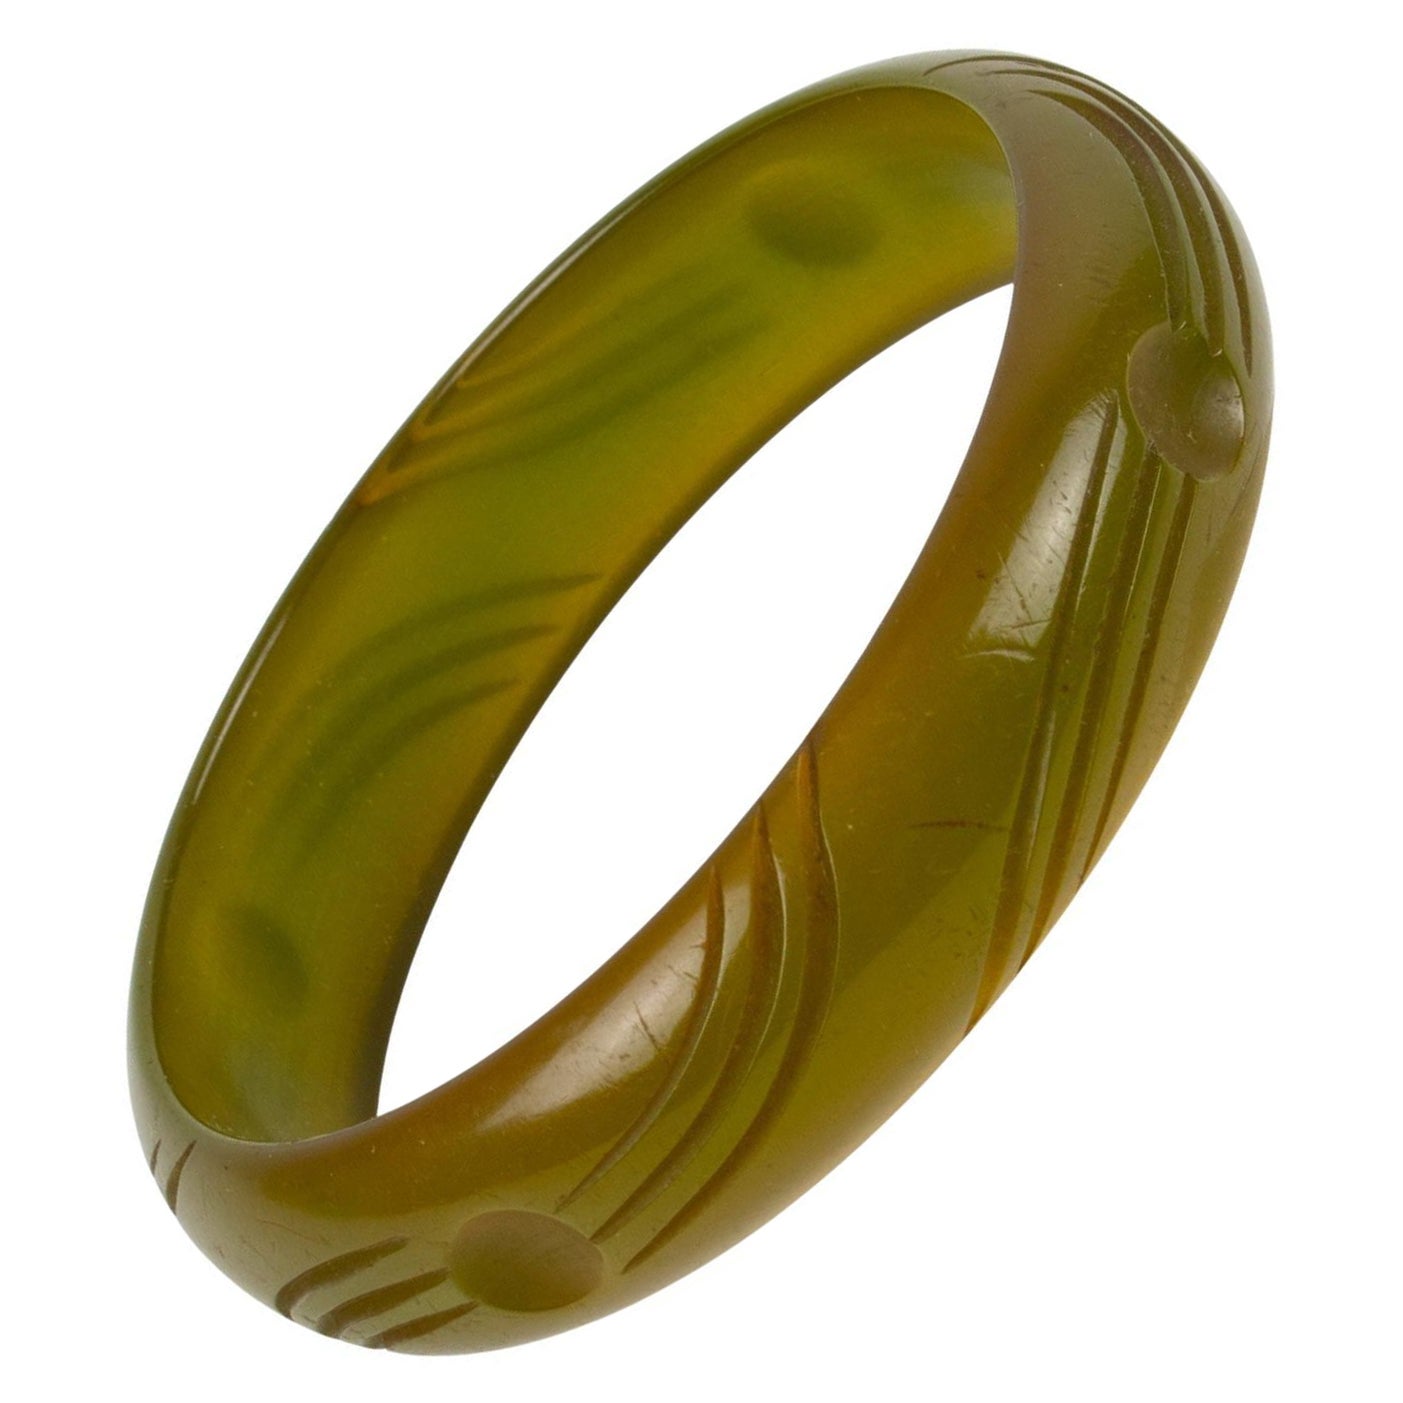 Bakelit geschnitzt Armband Armreif Translucent Asparagus Green